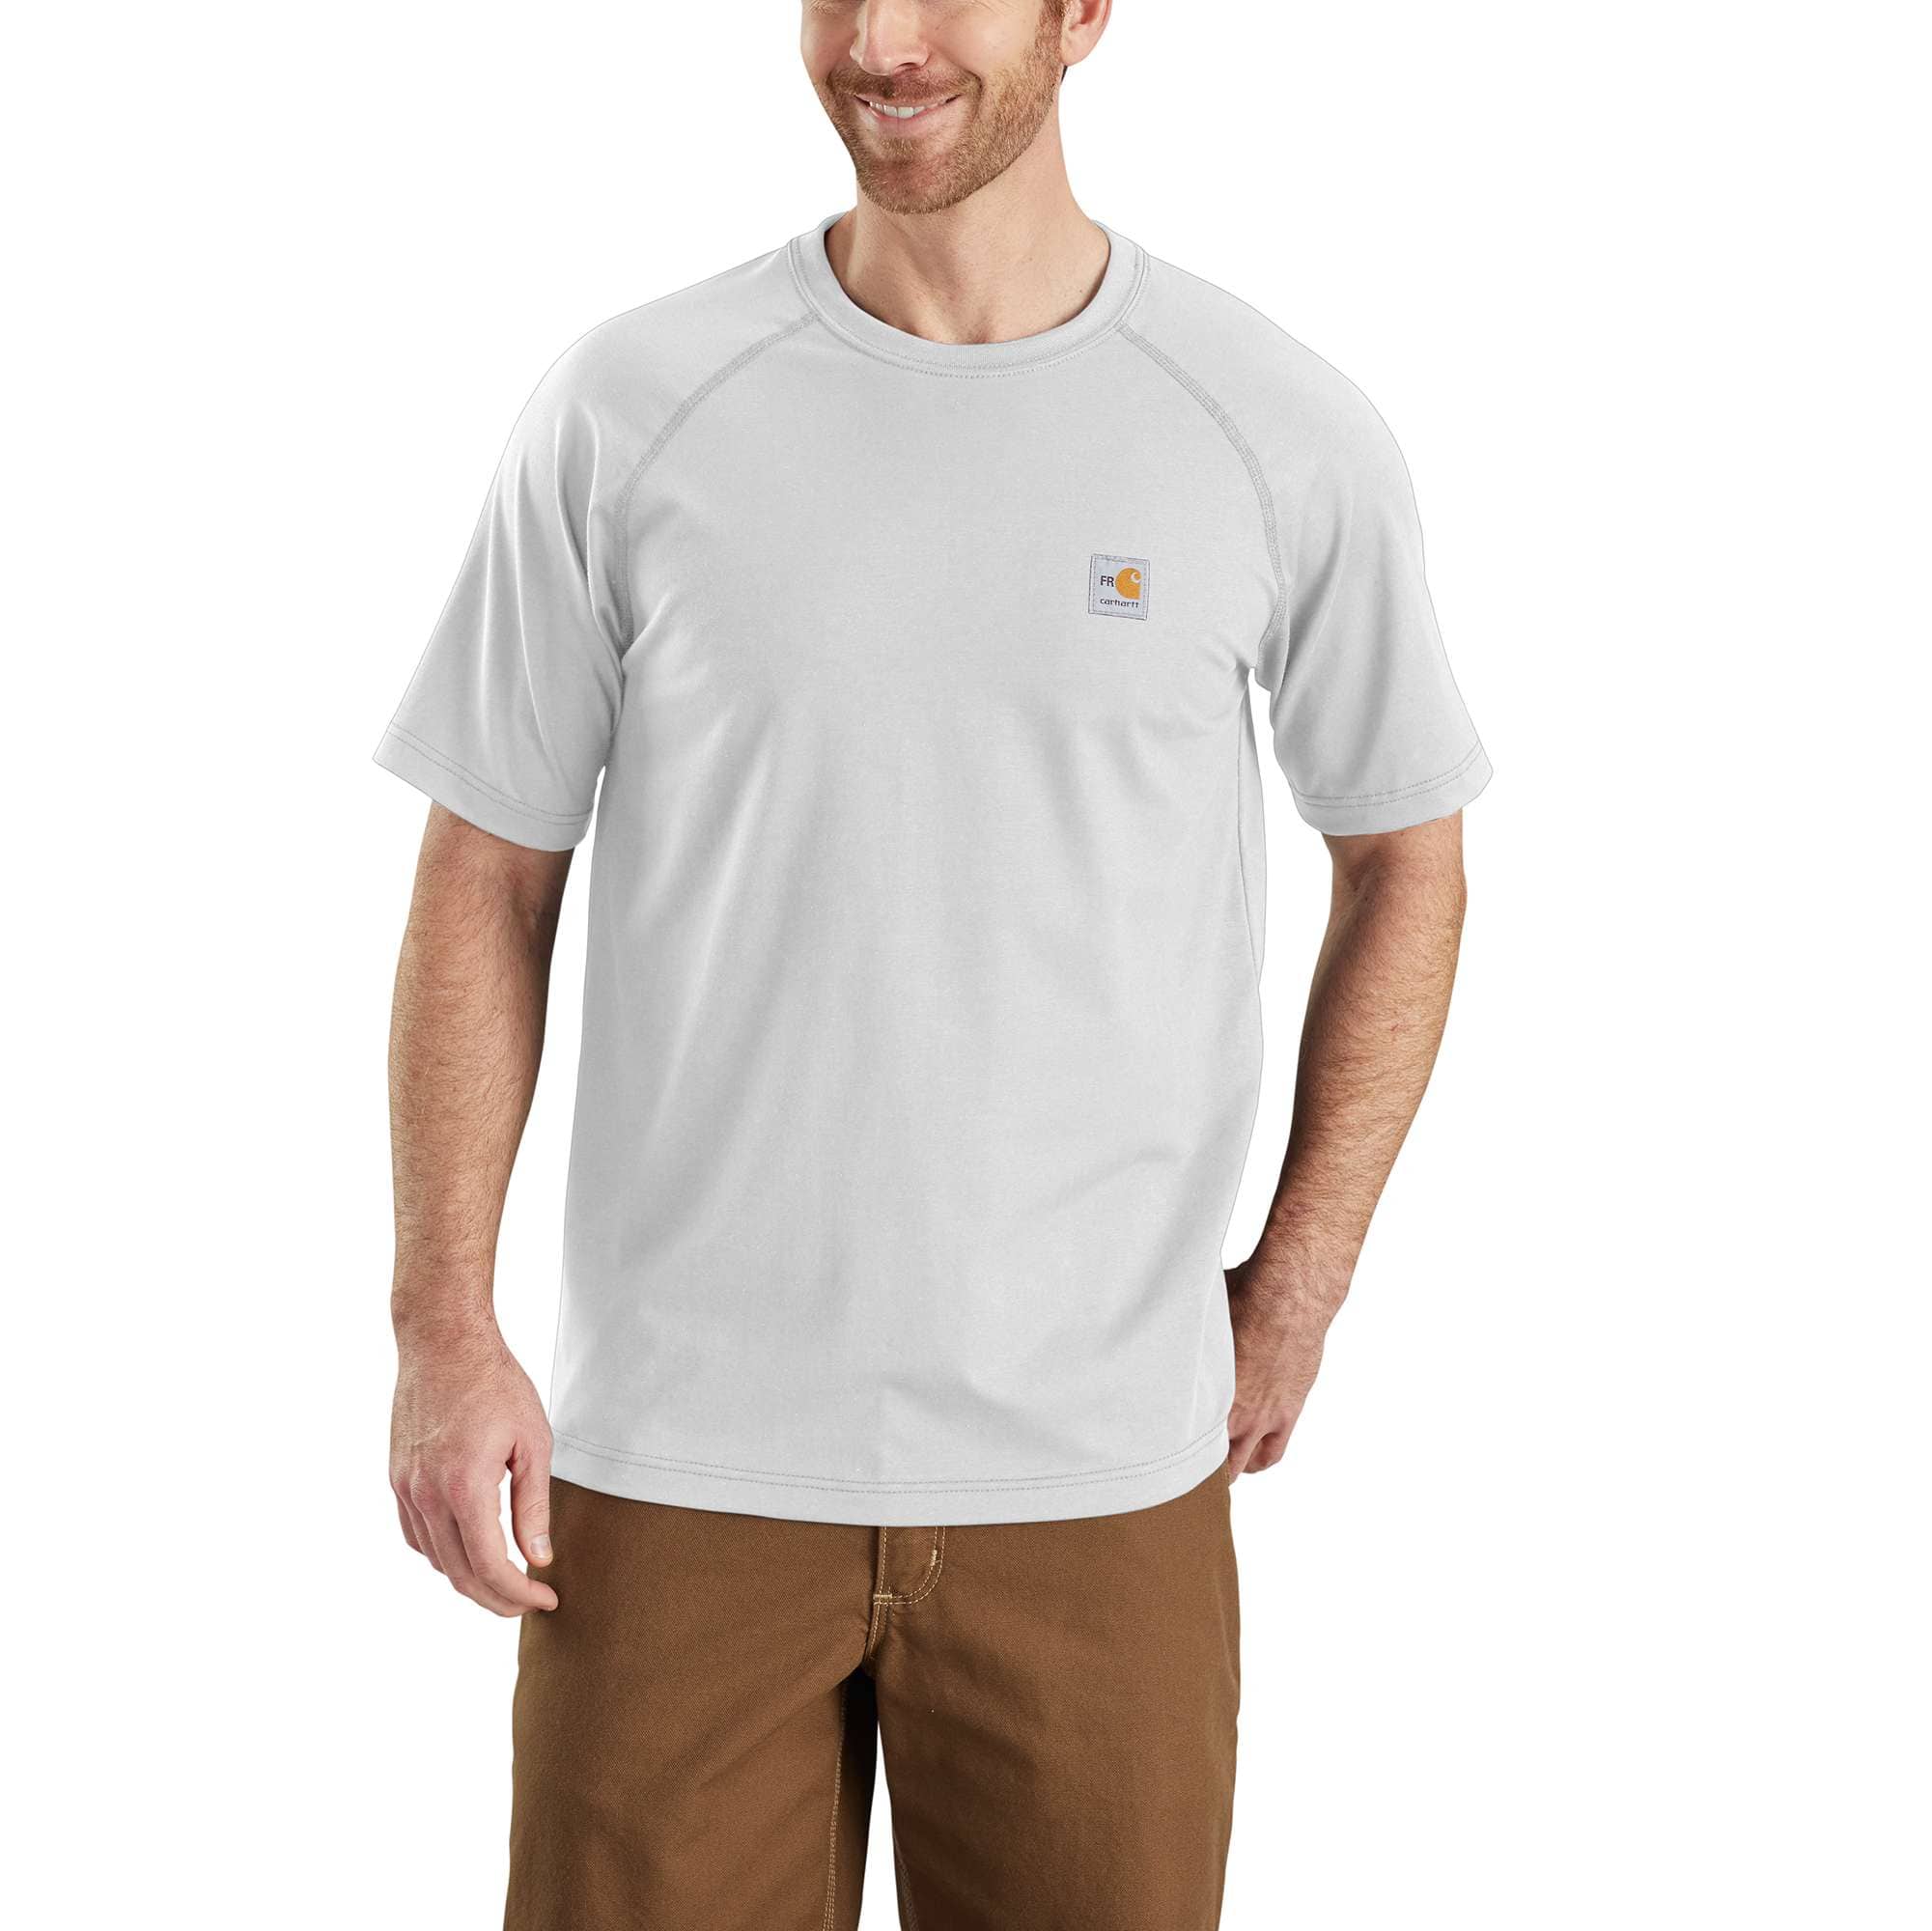 Carhartt Force Shirts Top Sellers, 59% OFF | campingcanyelles.com